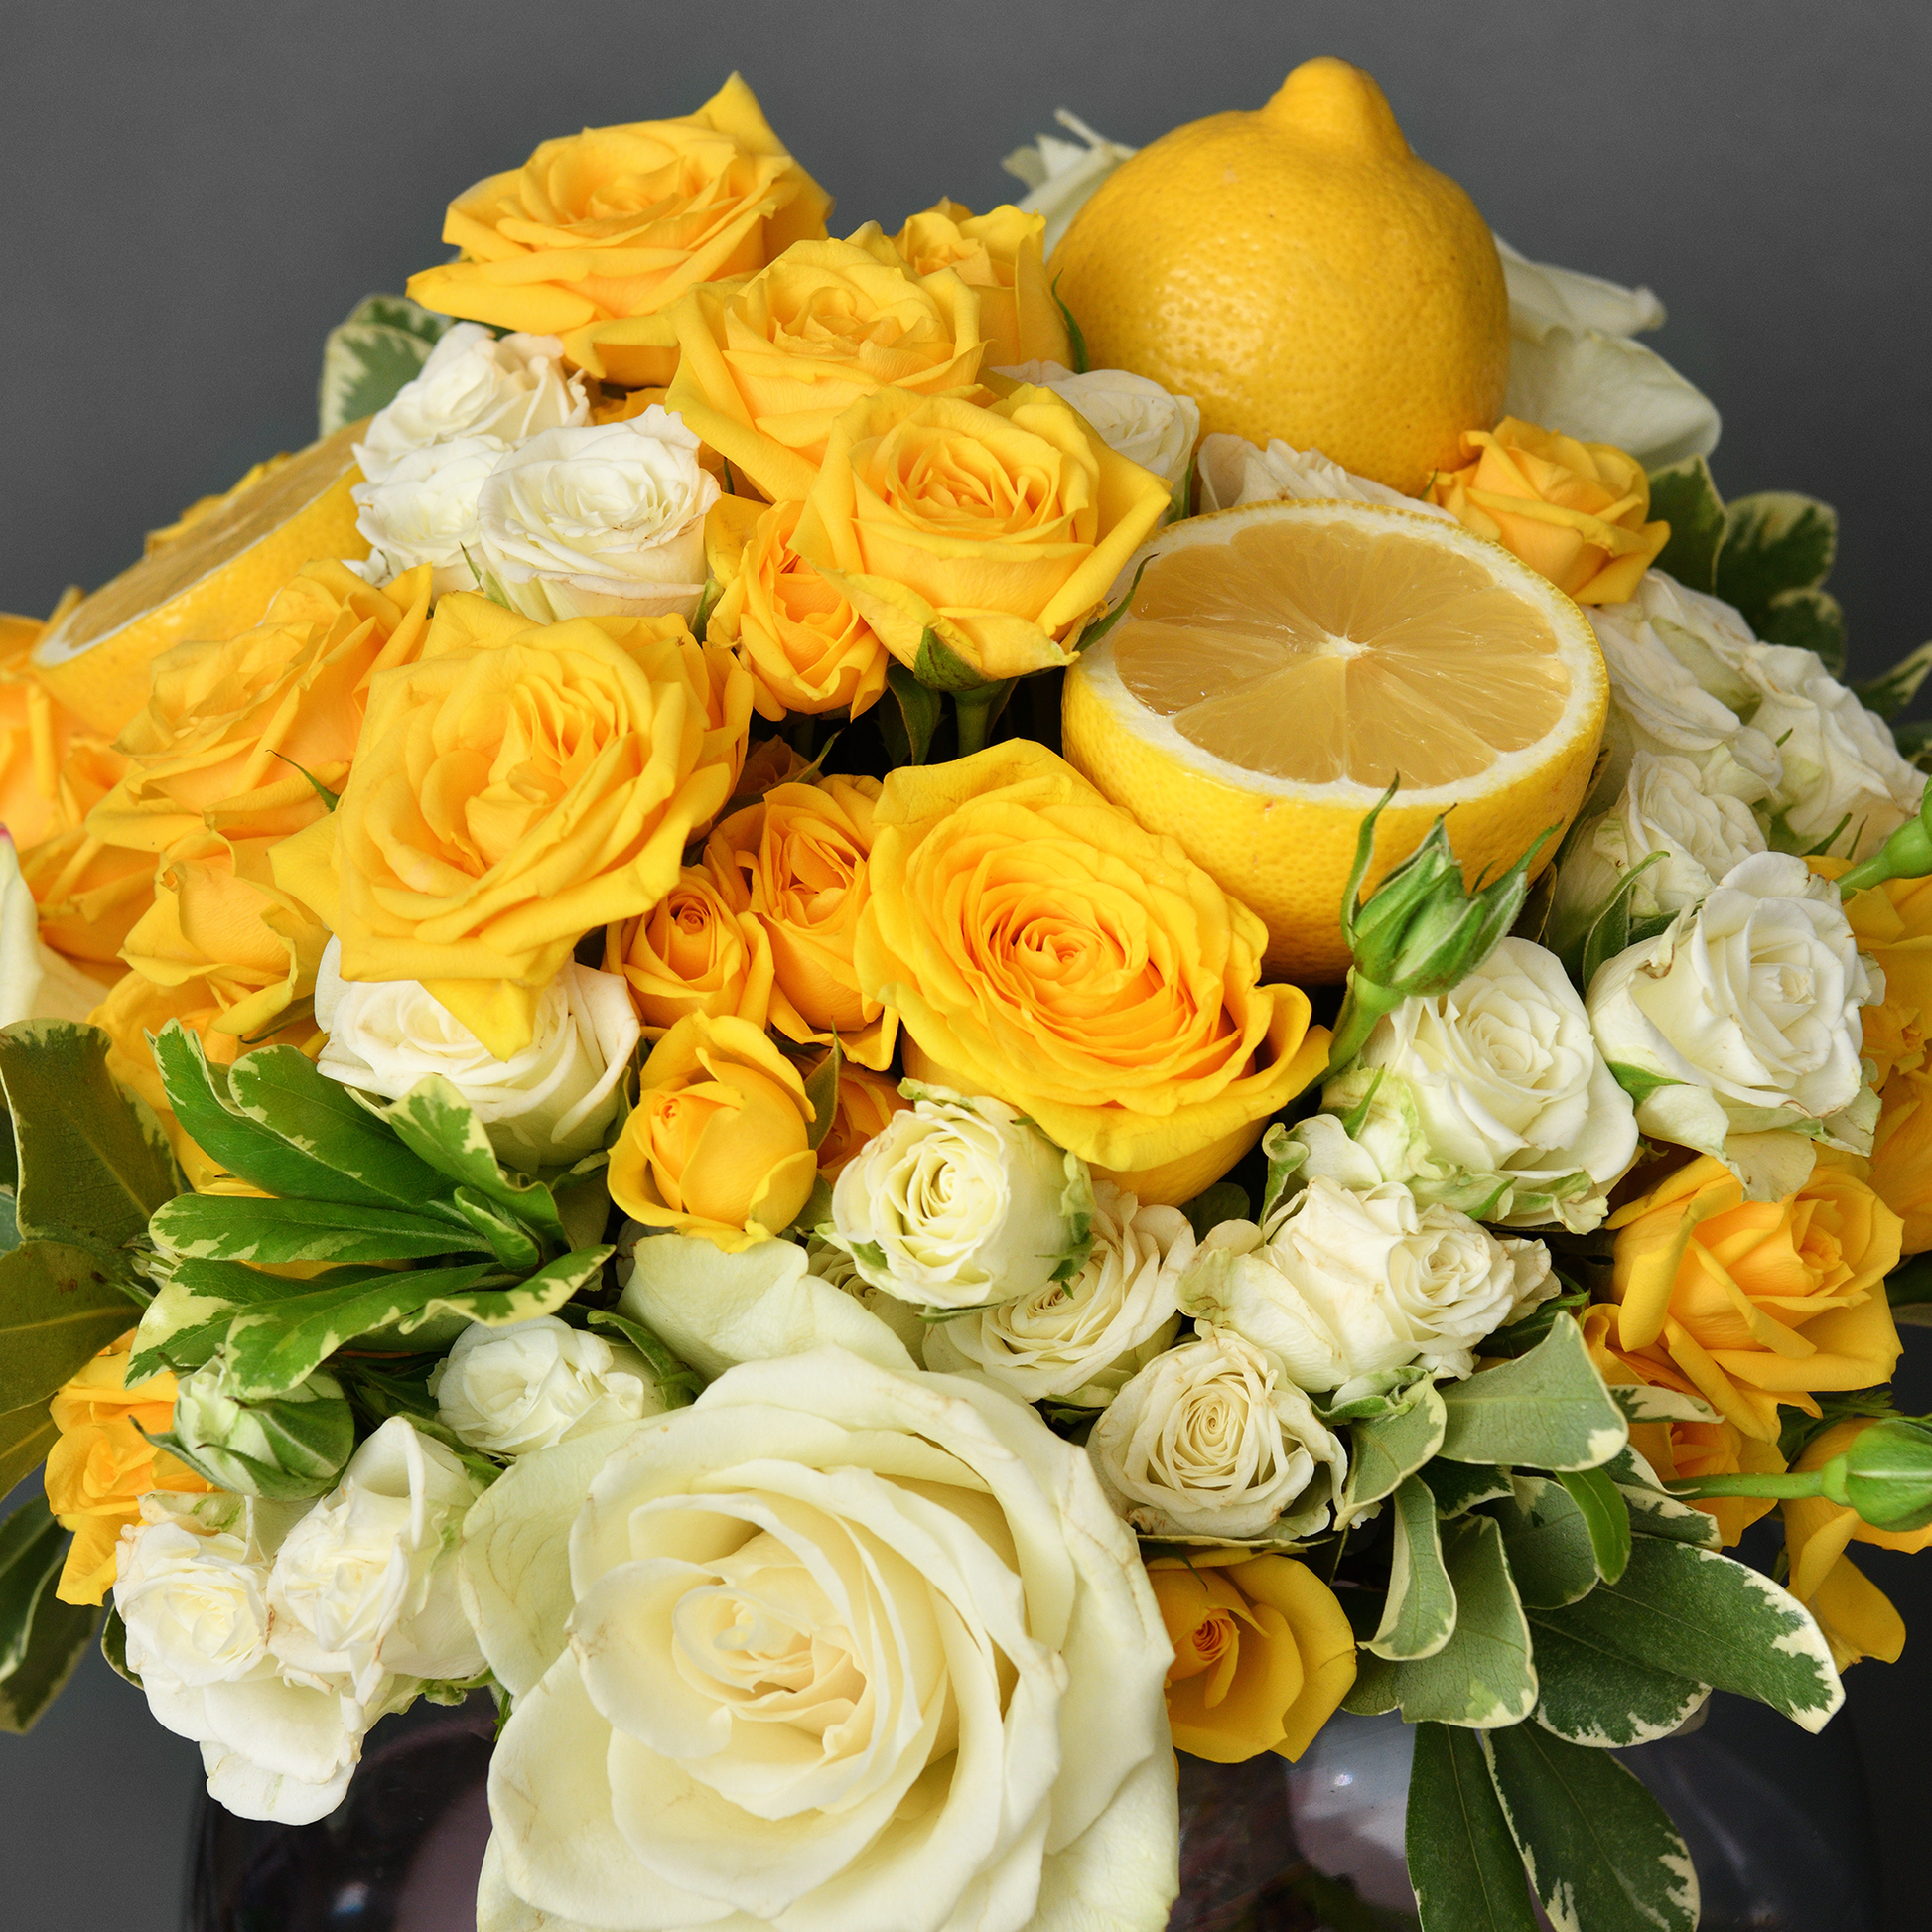 Lemon Rose Bouquet in Glass Vase